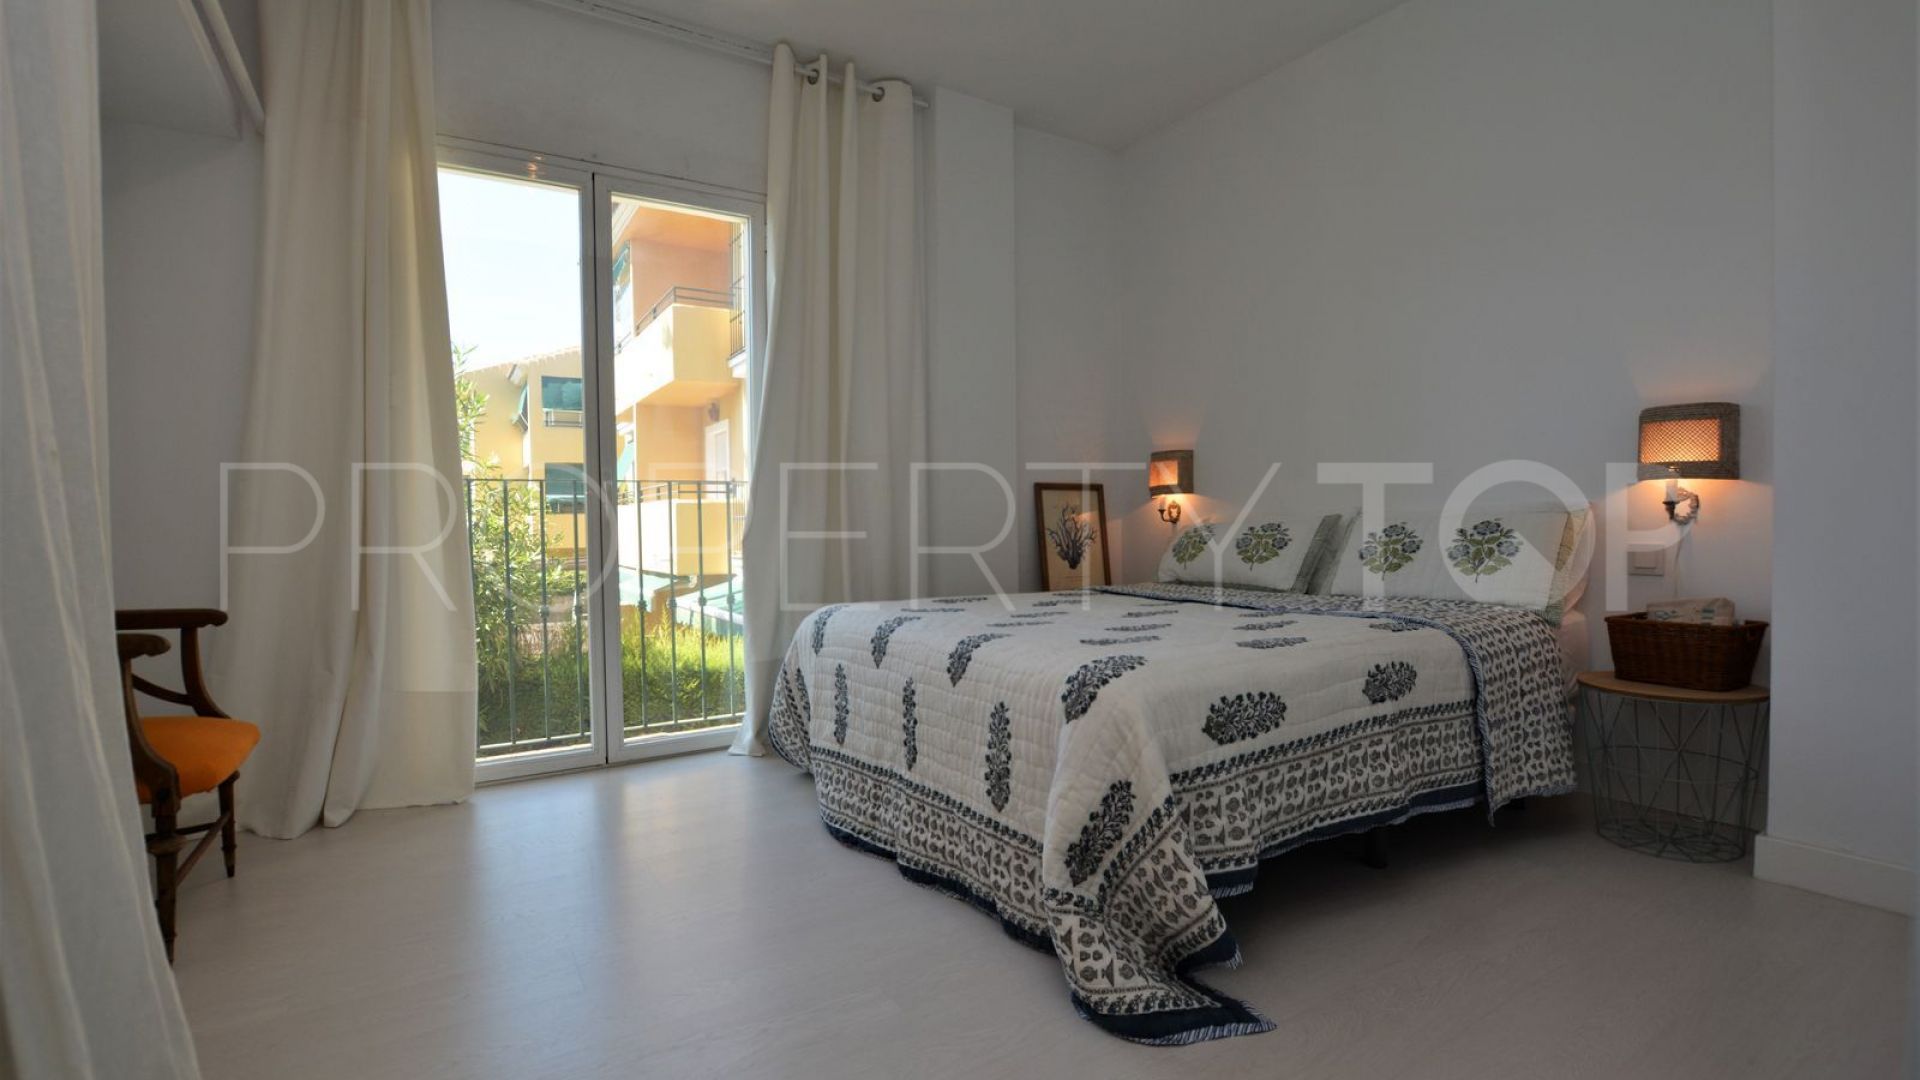 Apartment for sale in Guadalmina Baja